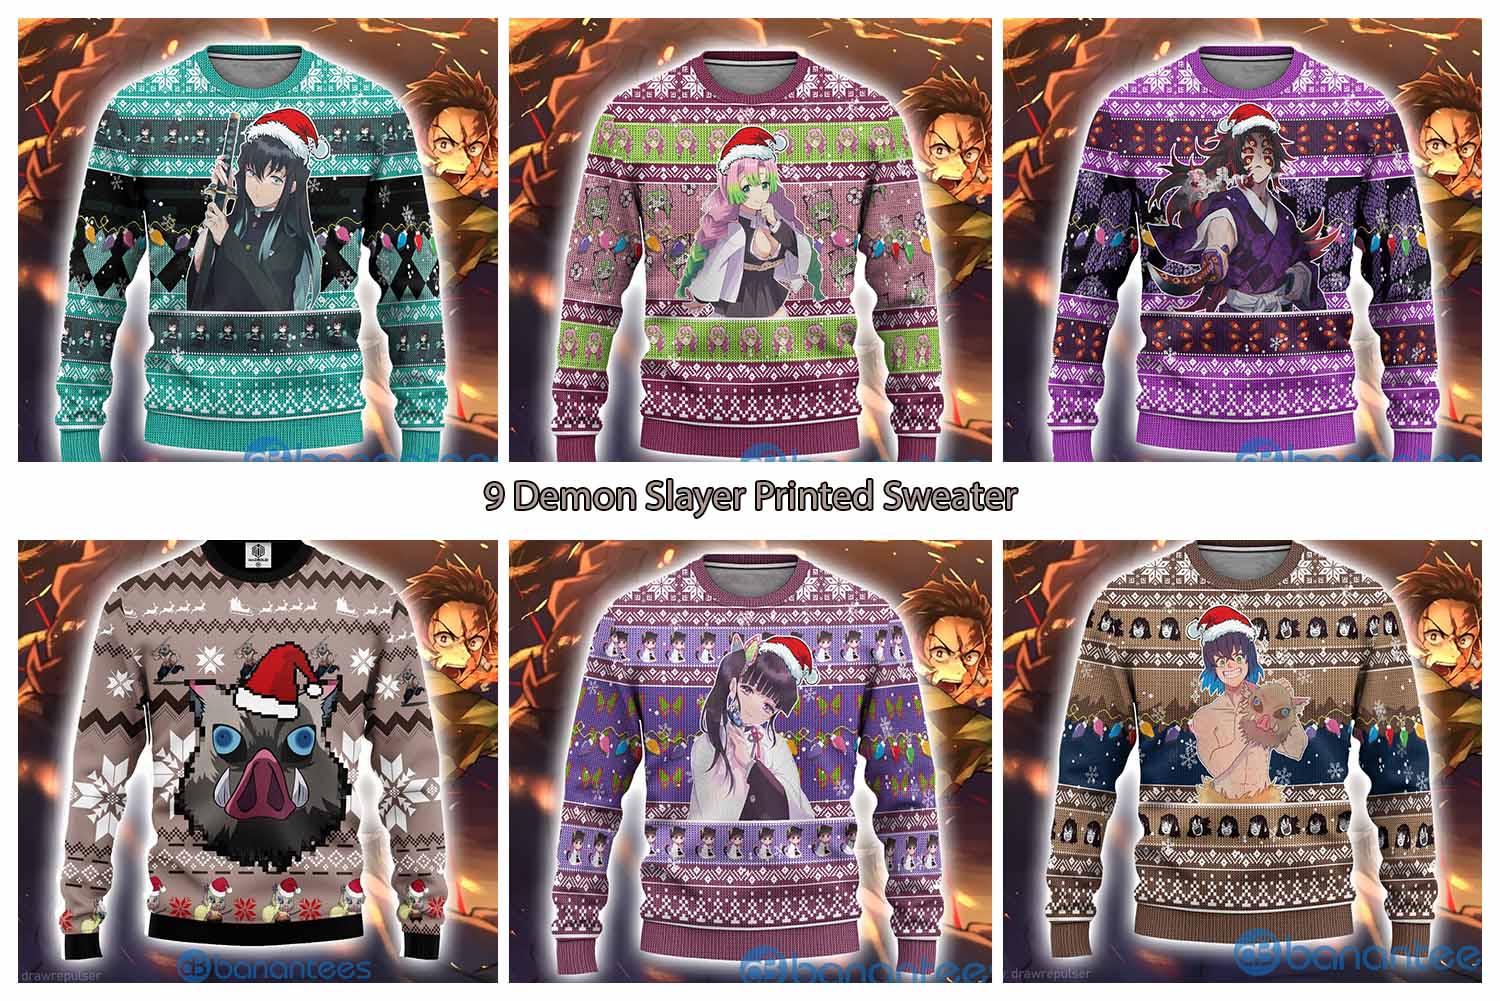 9 Demon Slayer Printed Sweater